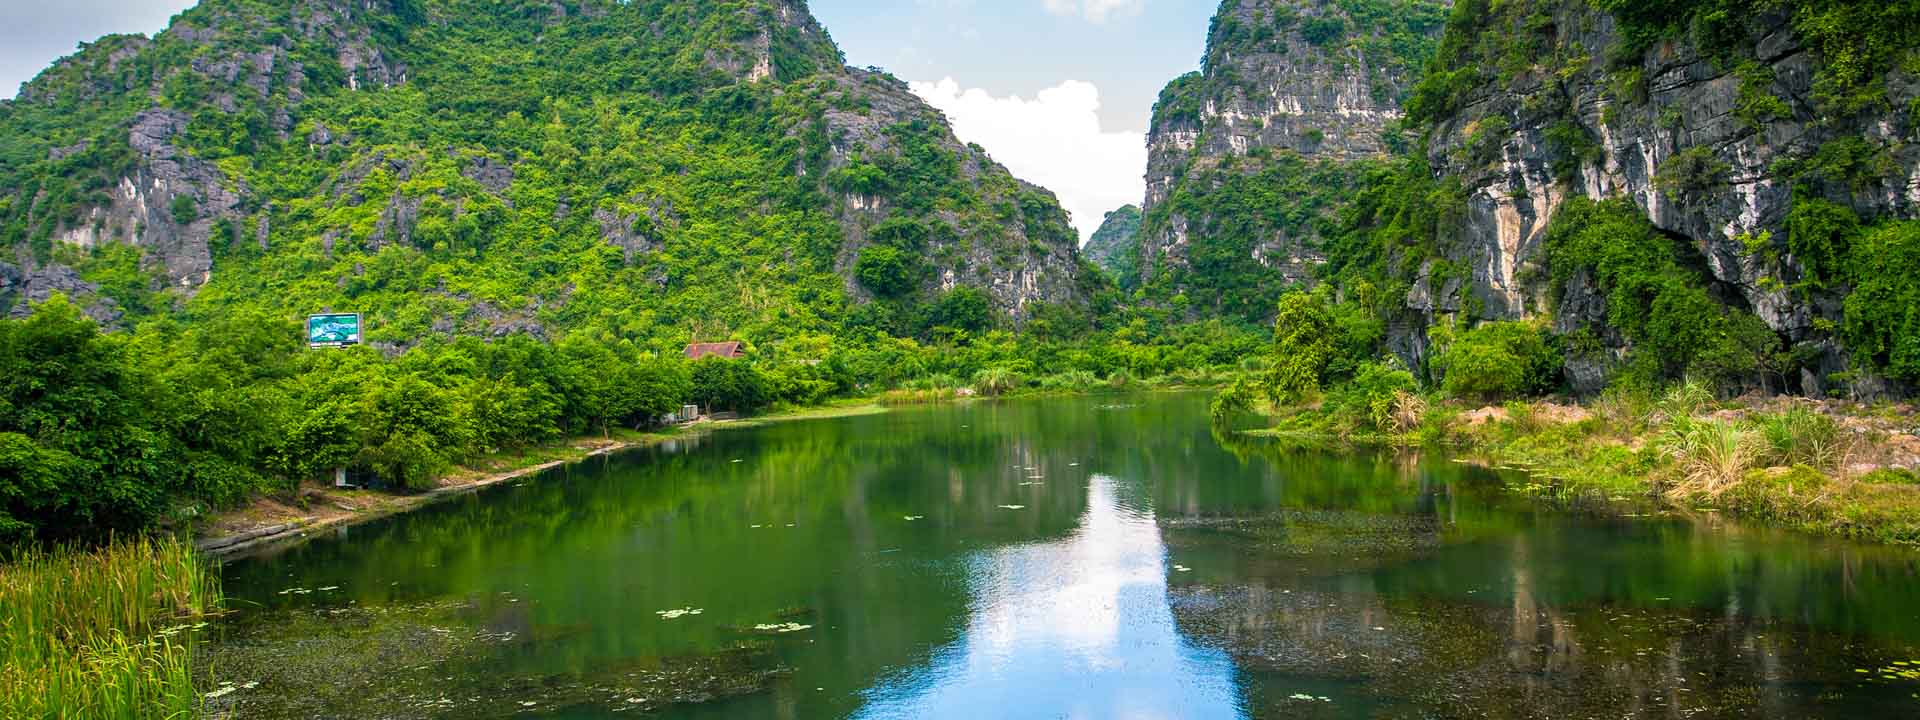 Ruta clásica del Sur al Norte de Vietnam